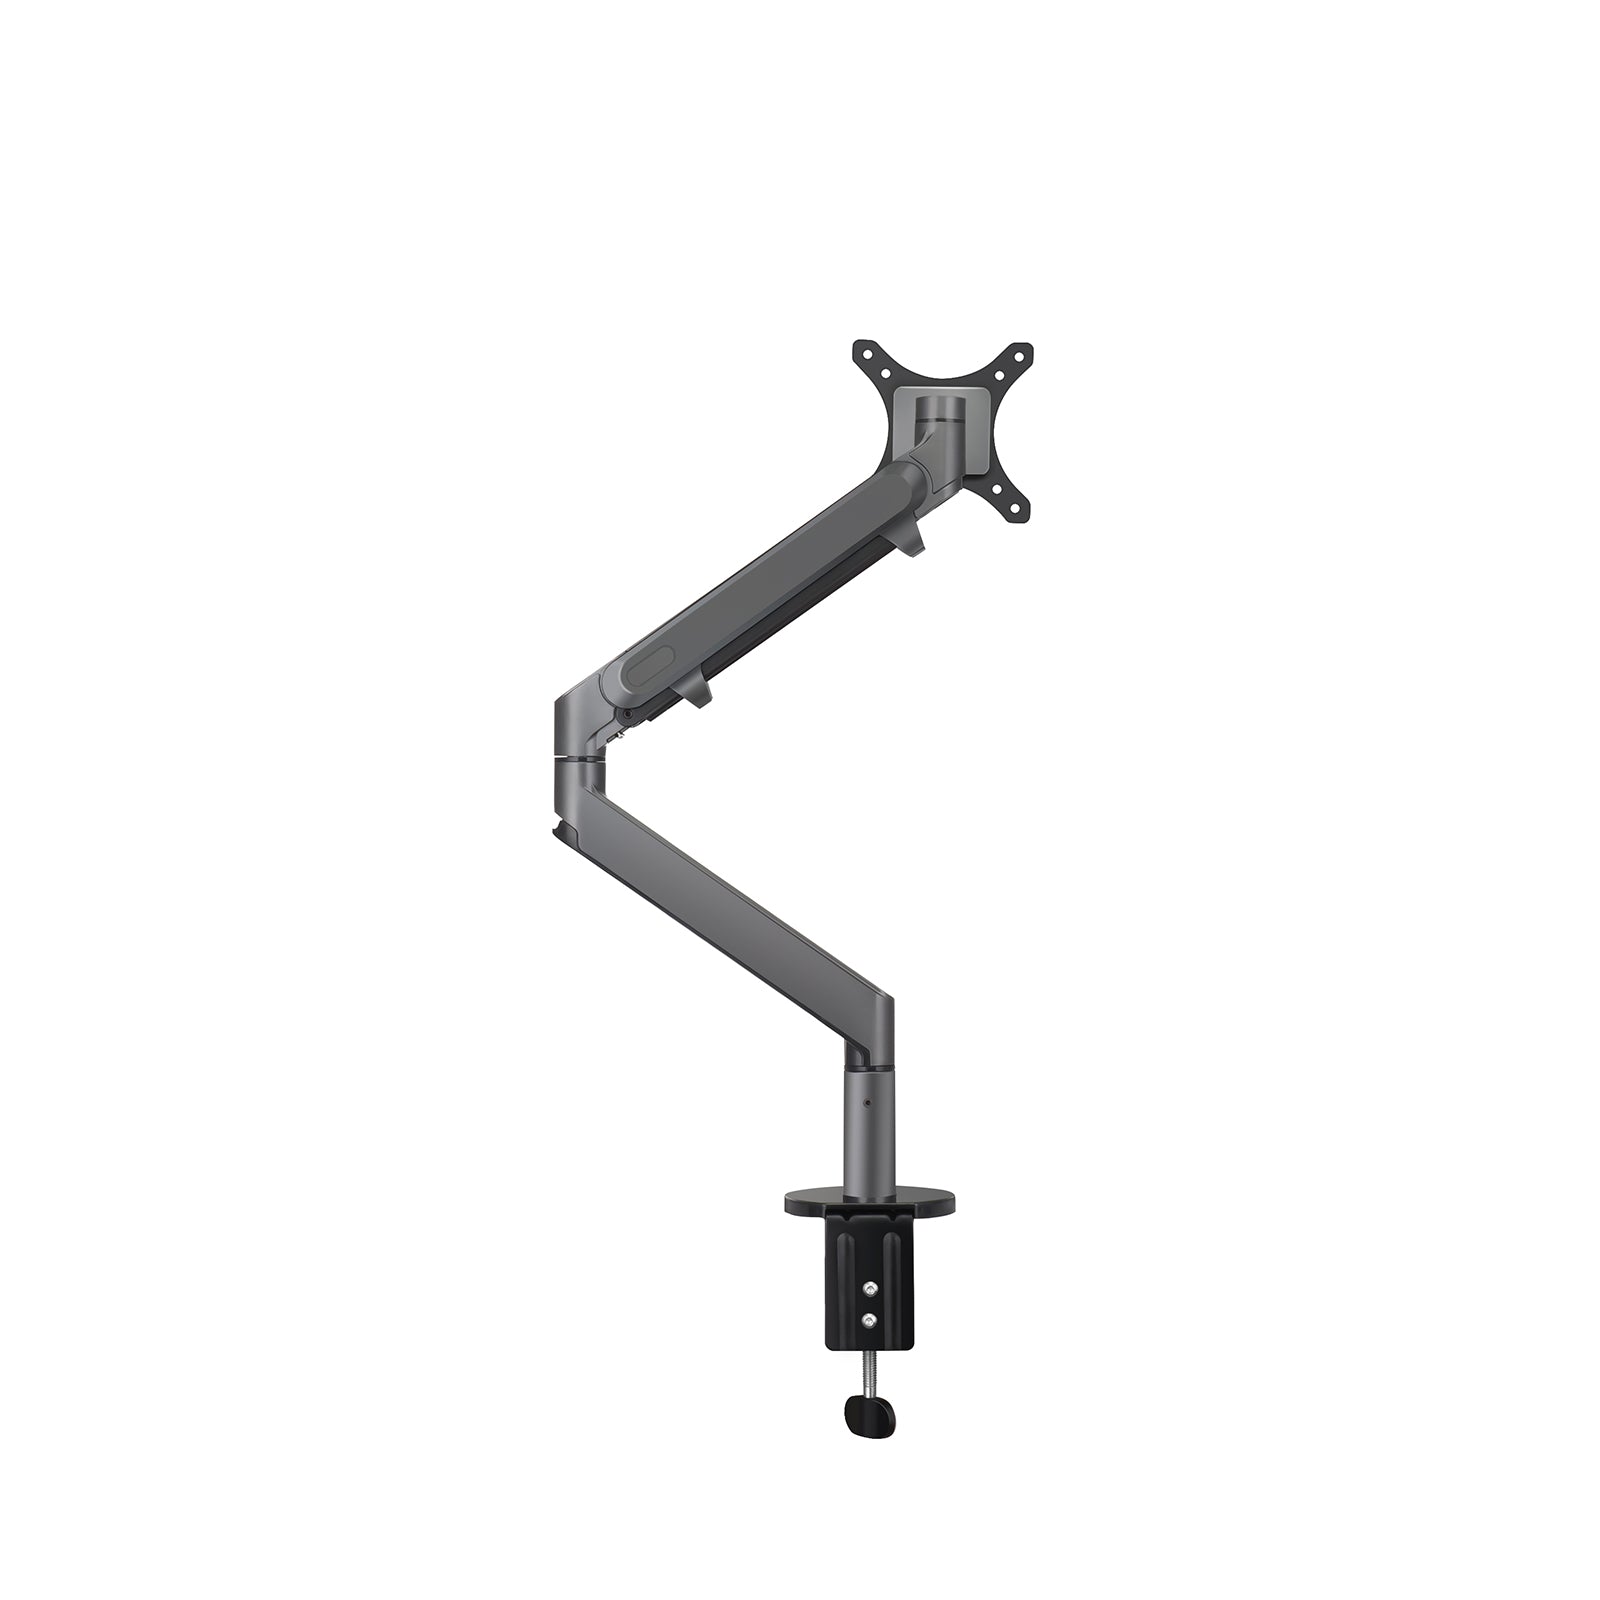 Flex Single Monitor Arm with Laptop Tray- Gas Spring
VORII